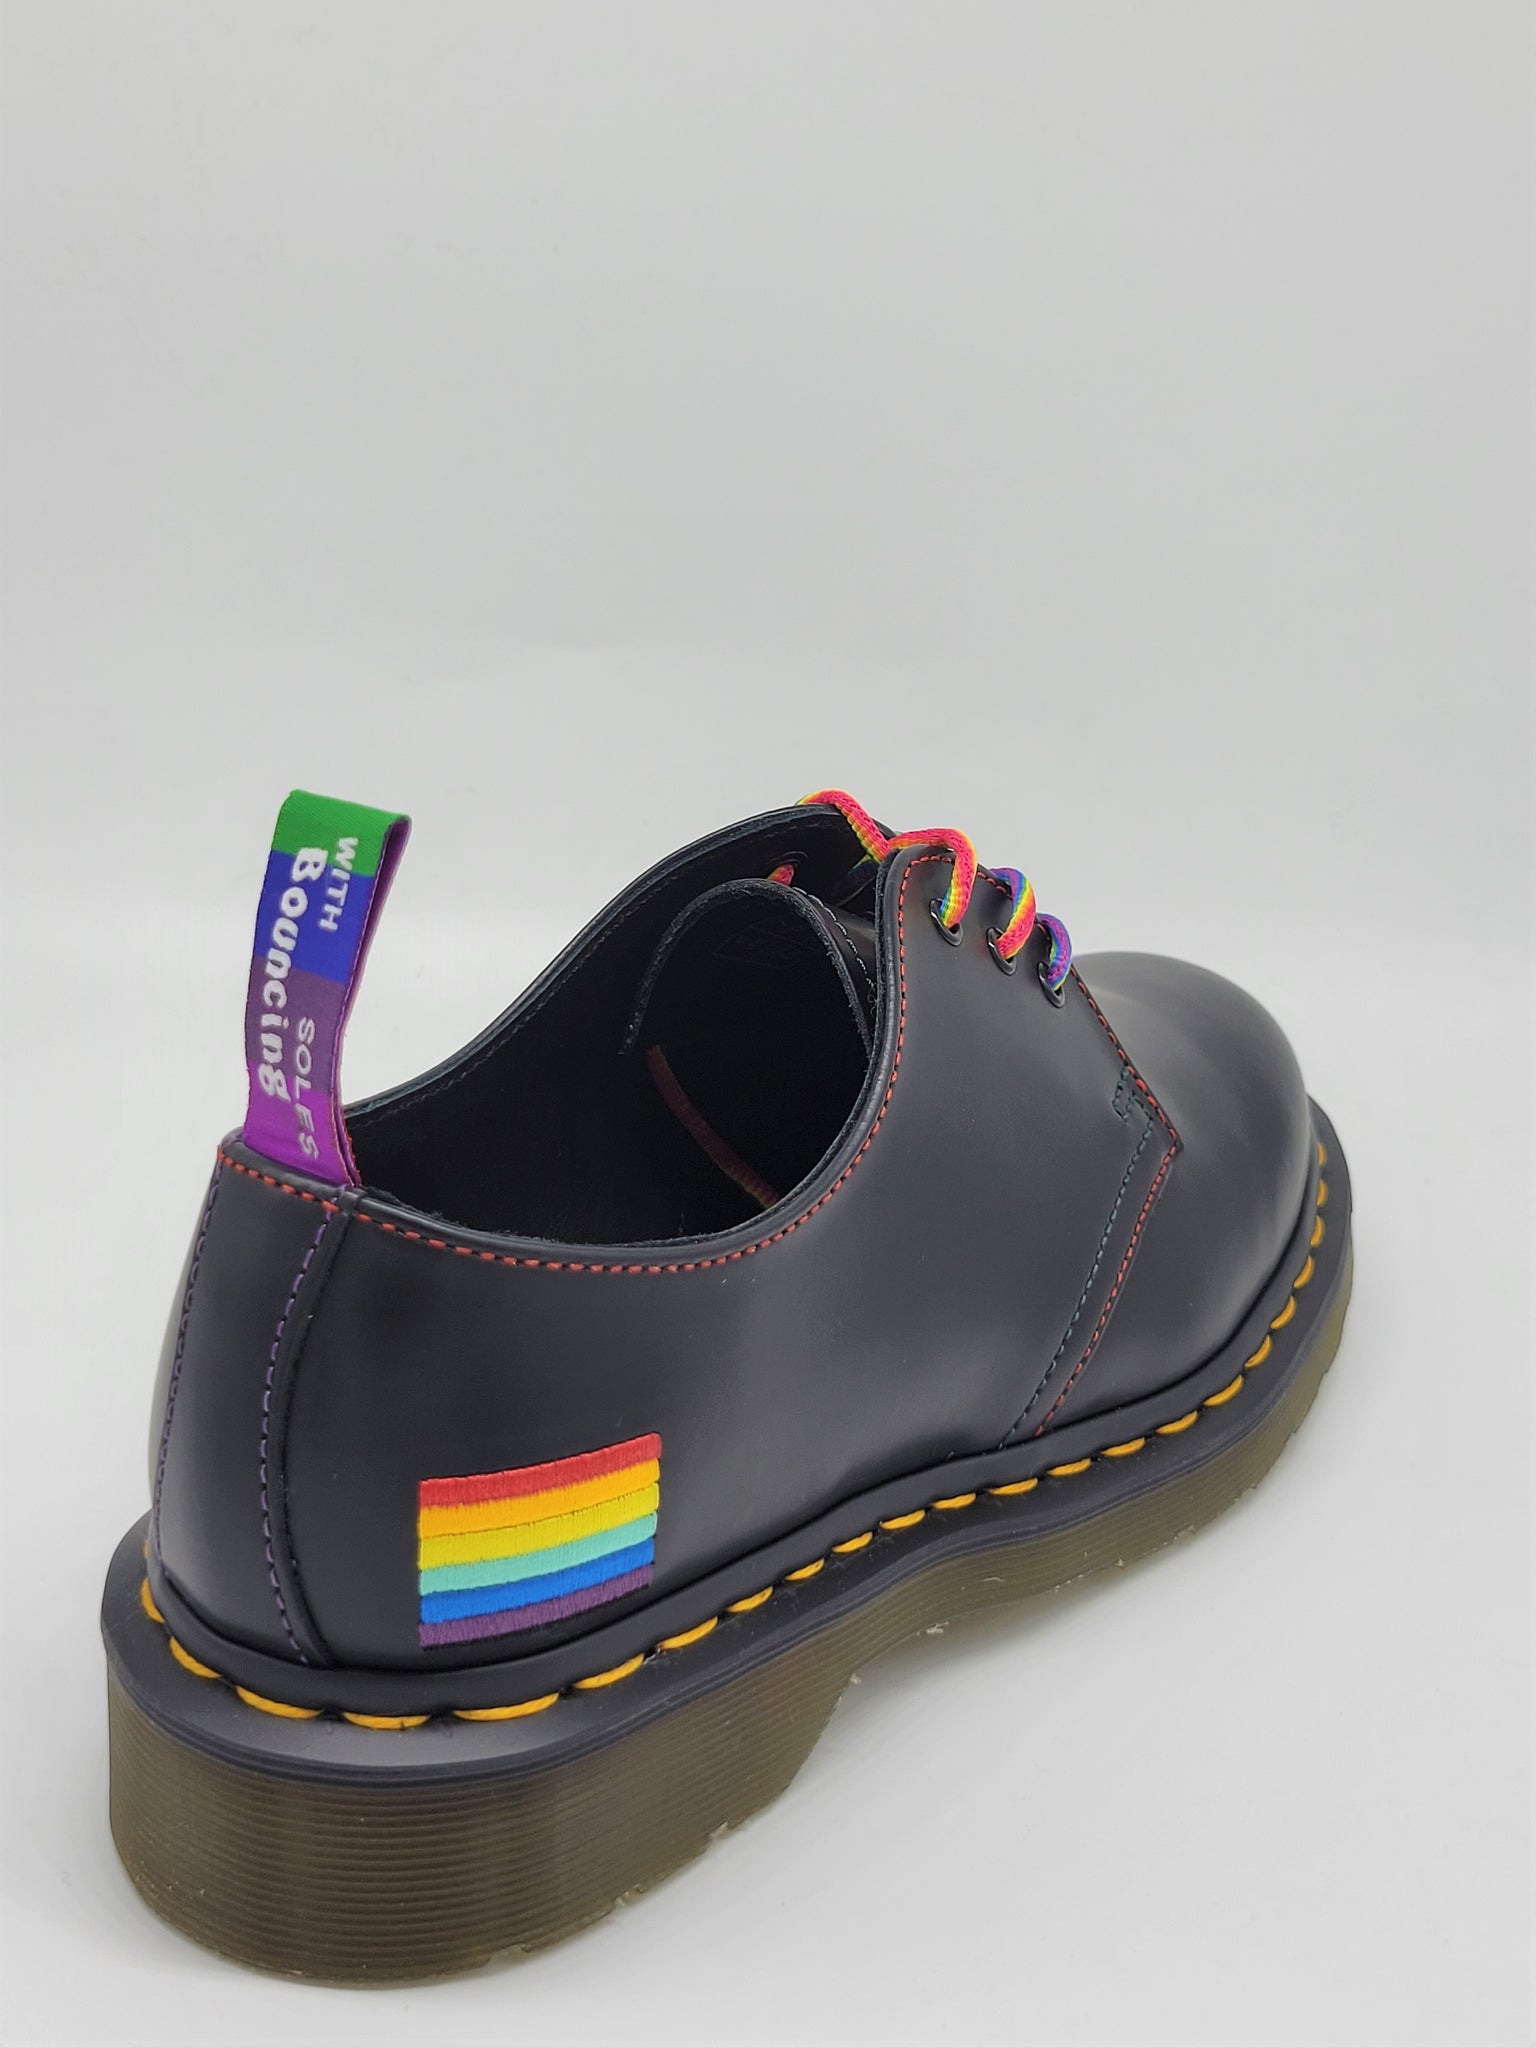 Dr. Martens Women's 1461 Pride Oxford Shoes